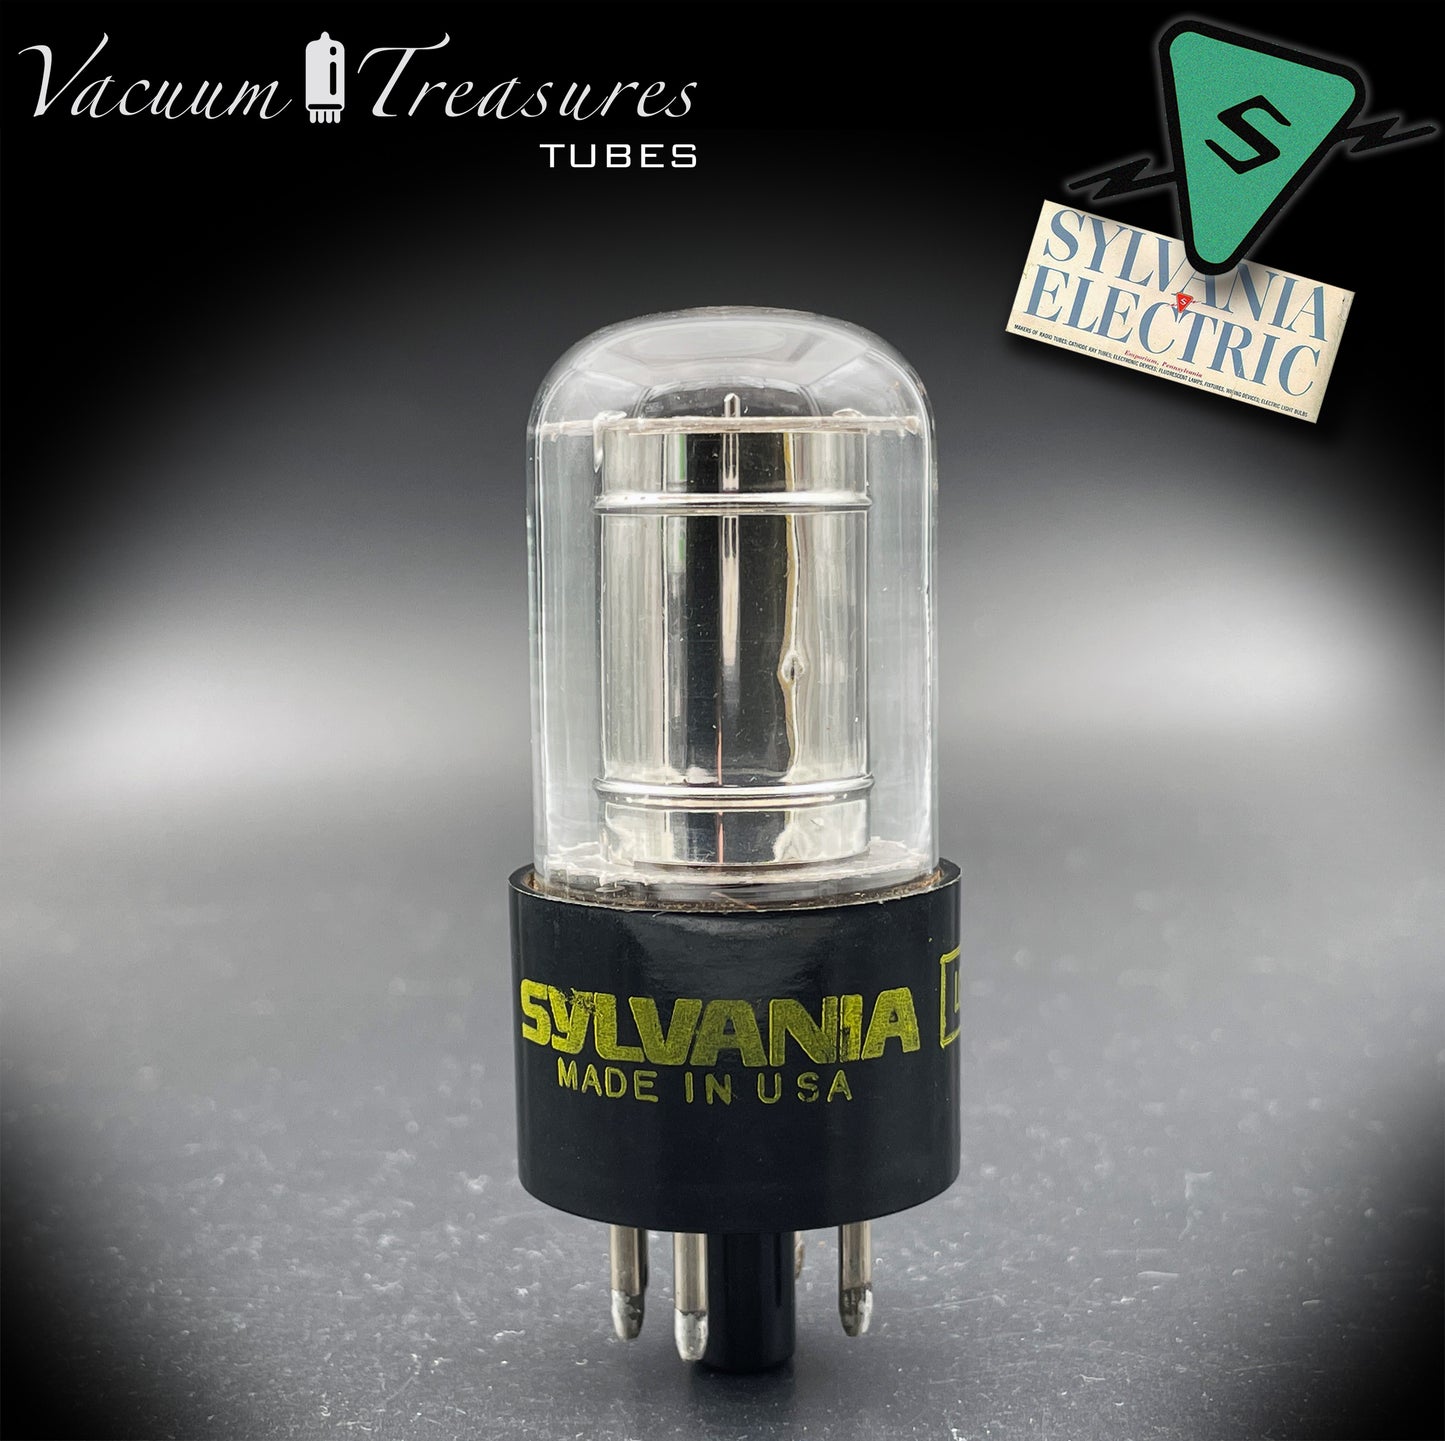 0D3A ( VR150 ) SILVANIA NOS NIB Voltage Regulator 0D3A = 0D3 = VT-139 = CV216 = VR150 = 150С5-30 Radio Röhre Tested Tube Made in USA